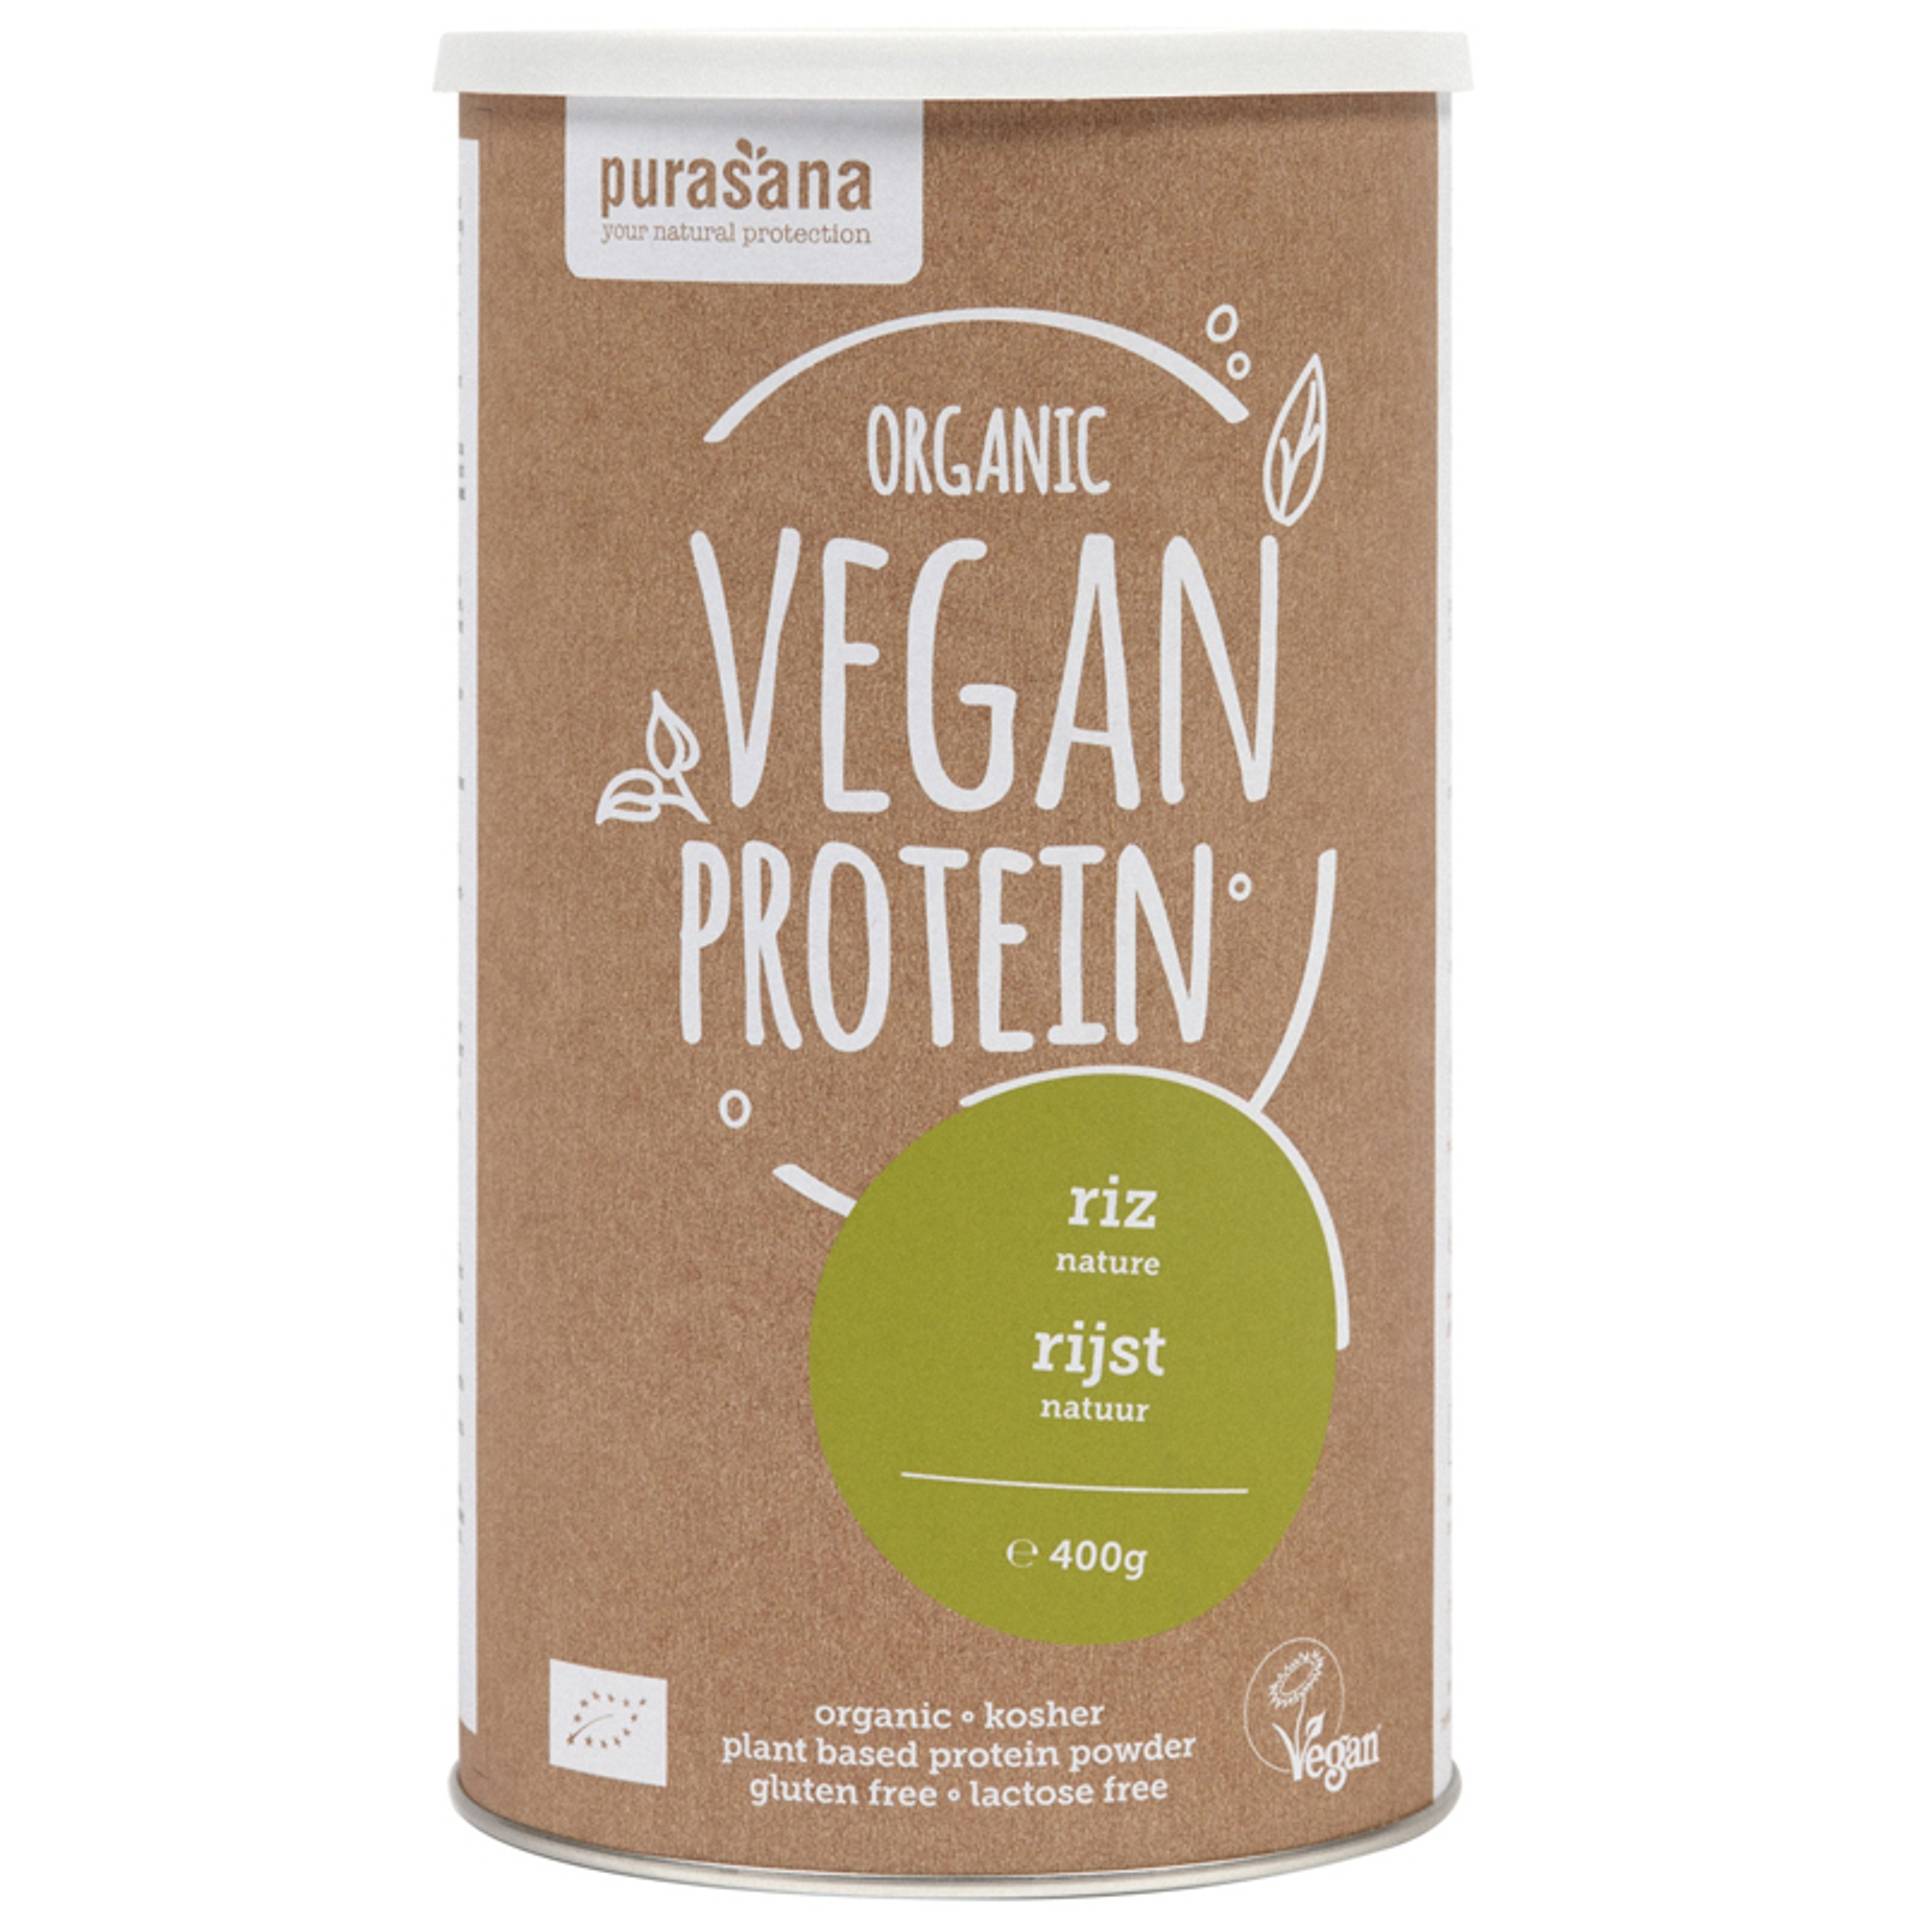 Purasana_Vegan-protein-Rice-naturel.jpg